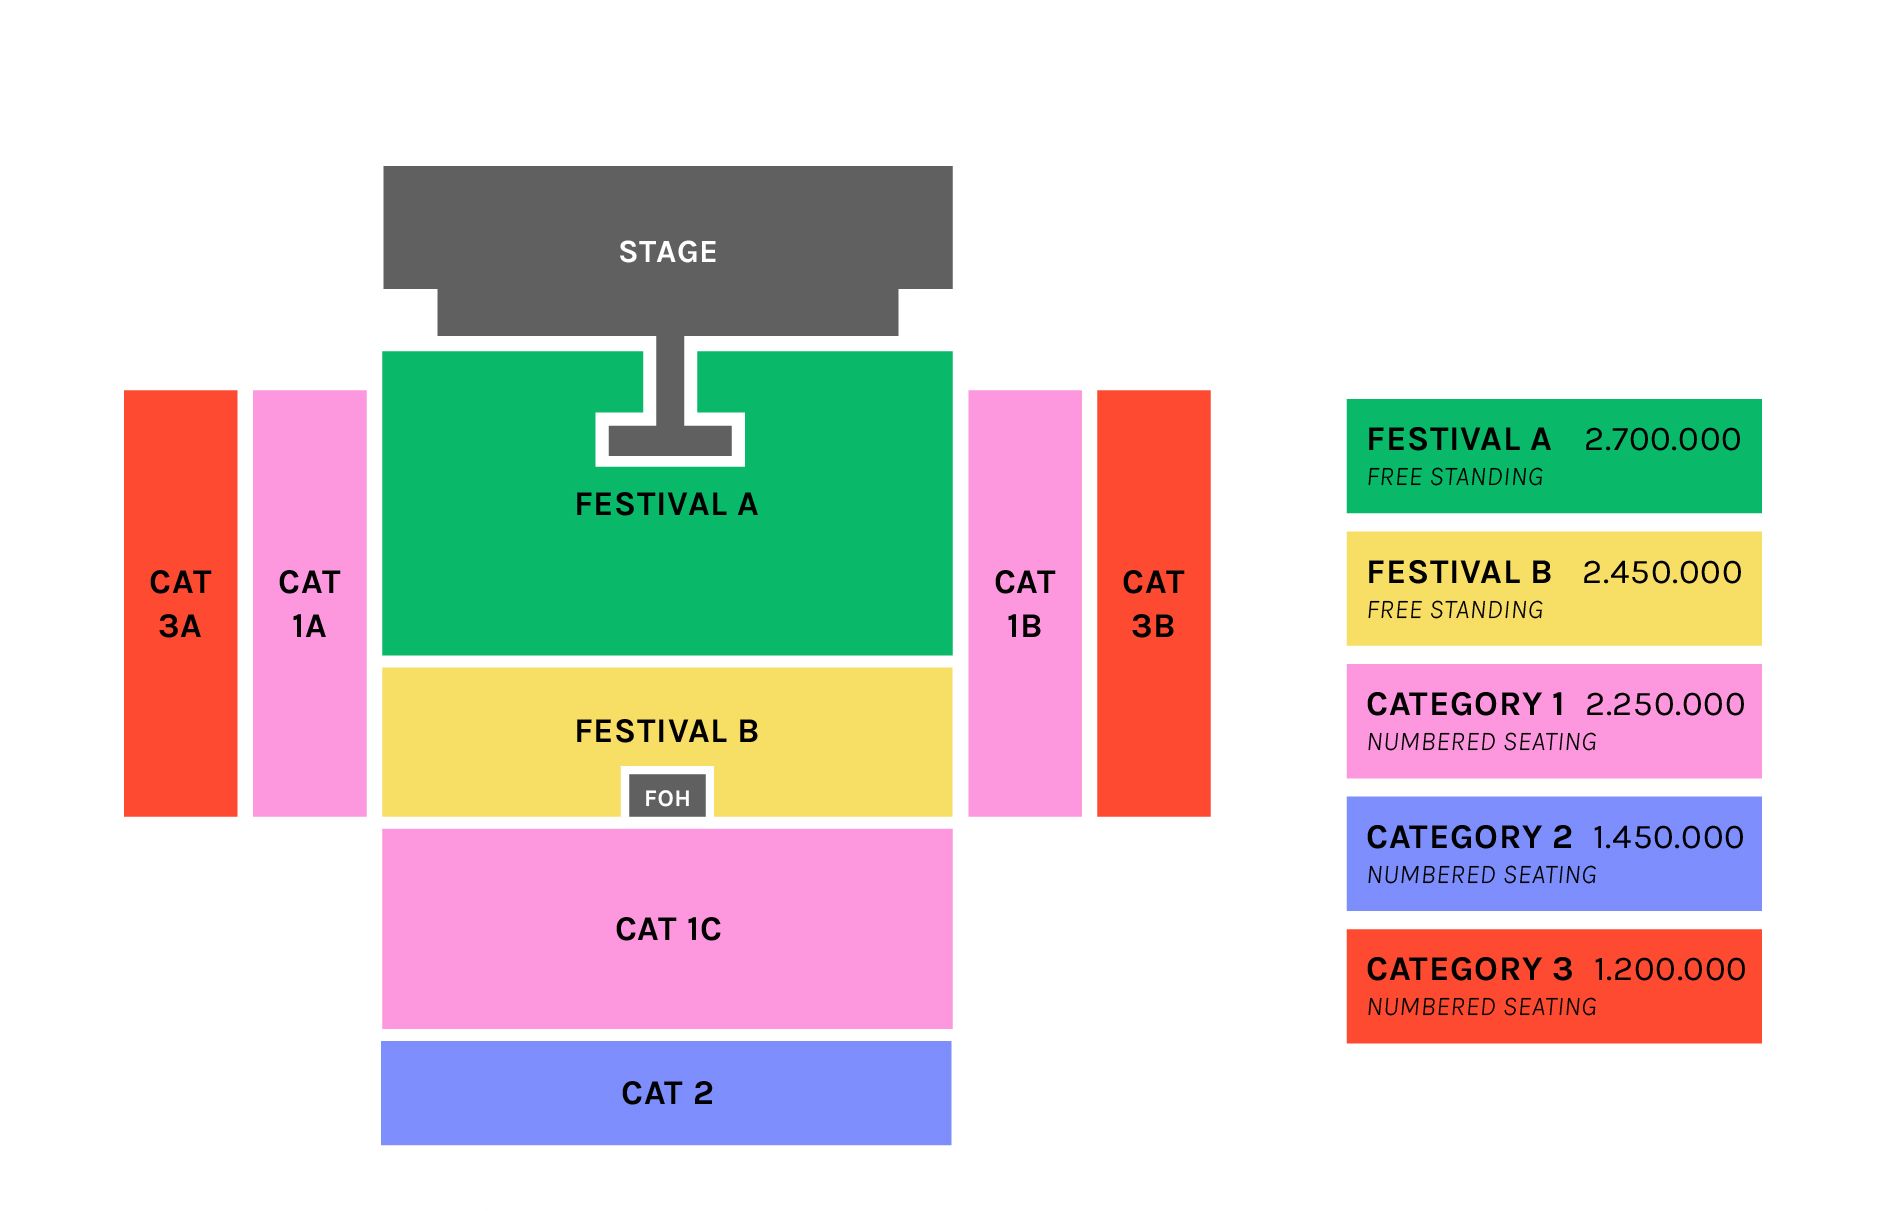 Denah venue konser ONE OK ROCK di Jakarta